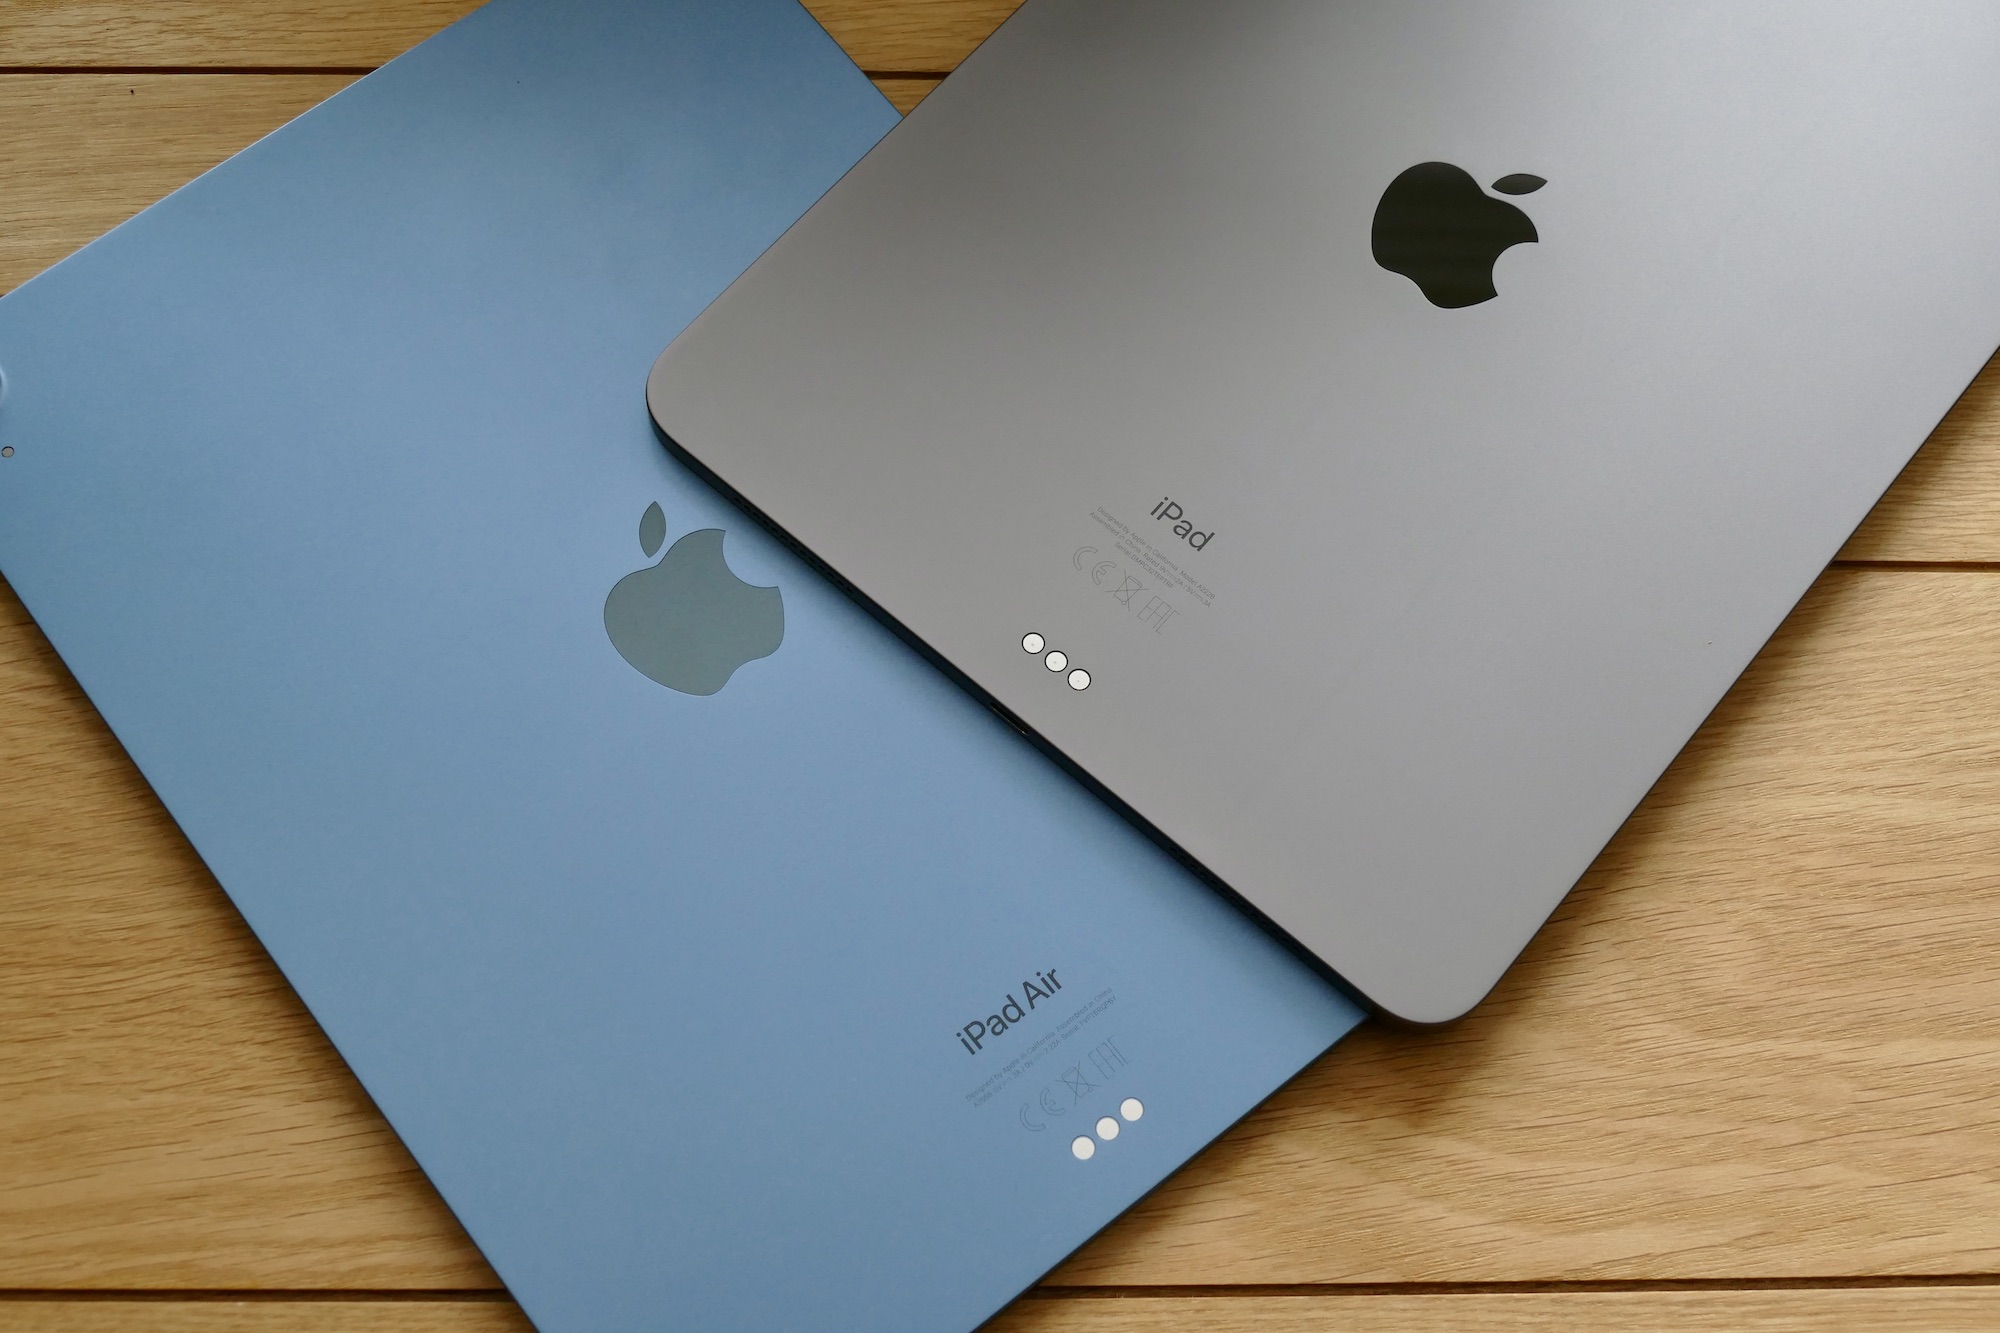 Apple의 iPad Air와 iPad Pro의 뒤편, 테이블 위에 놓인 태블릿들.